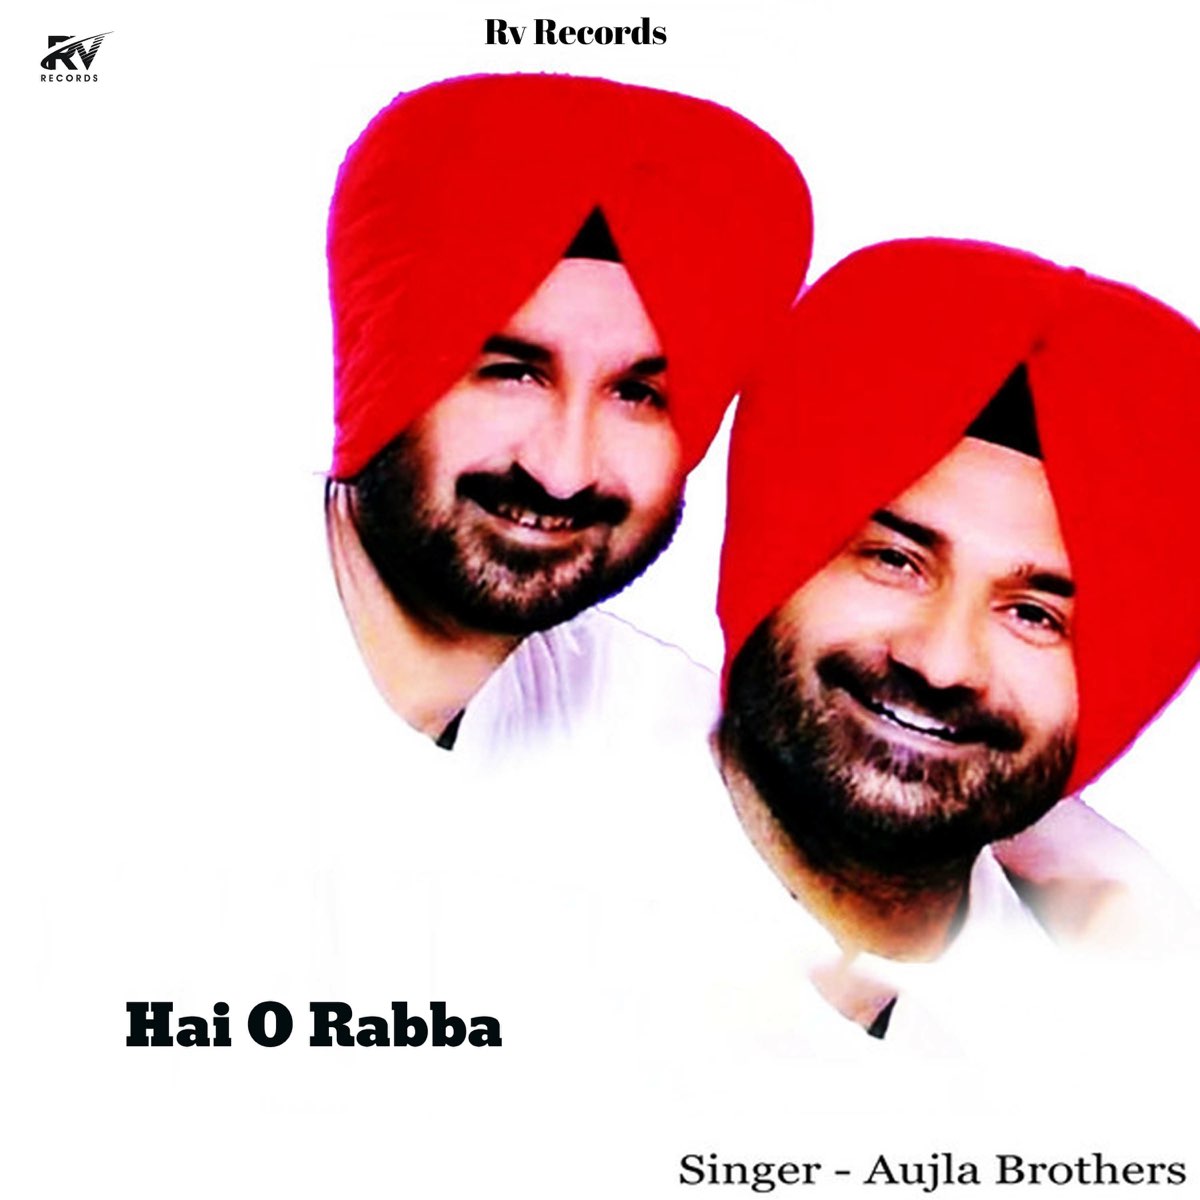 Hai O Rabba - Single - Album by Aujla Brothers - Apple Music